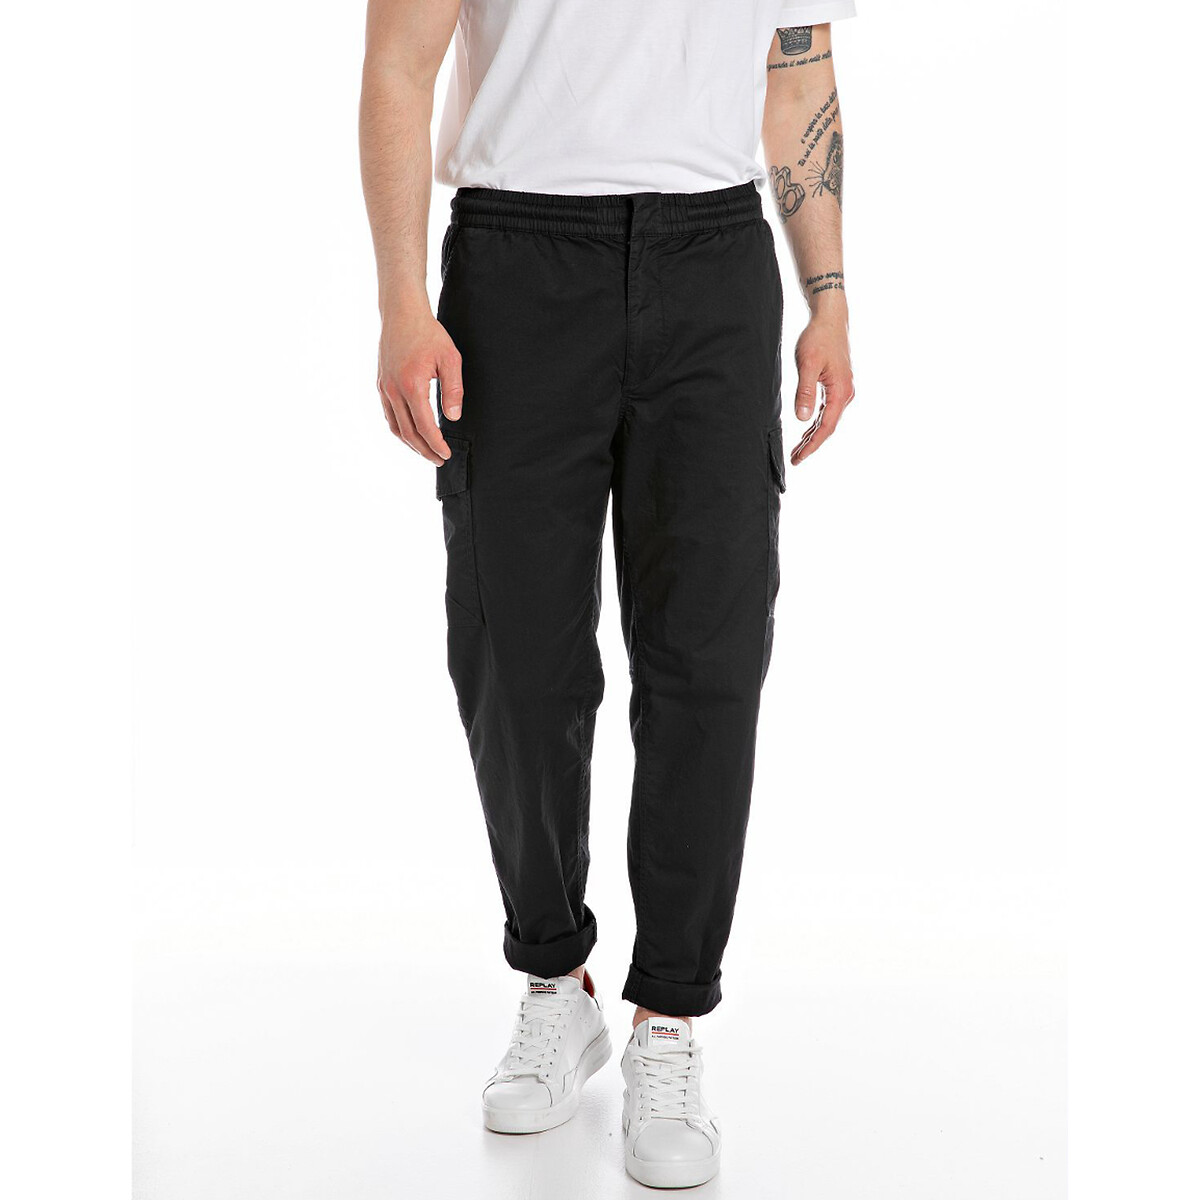 Cotton cargo trousers, black, Replay | La Redoute